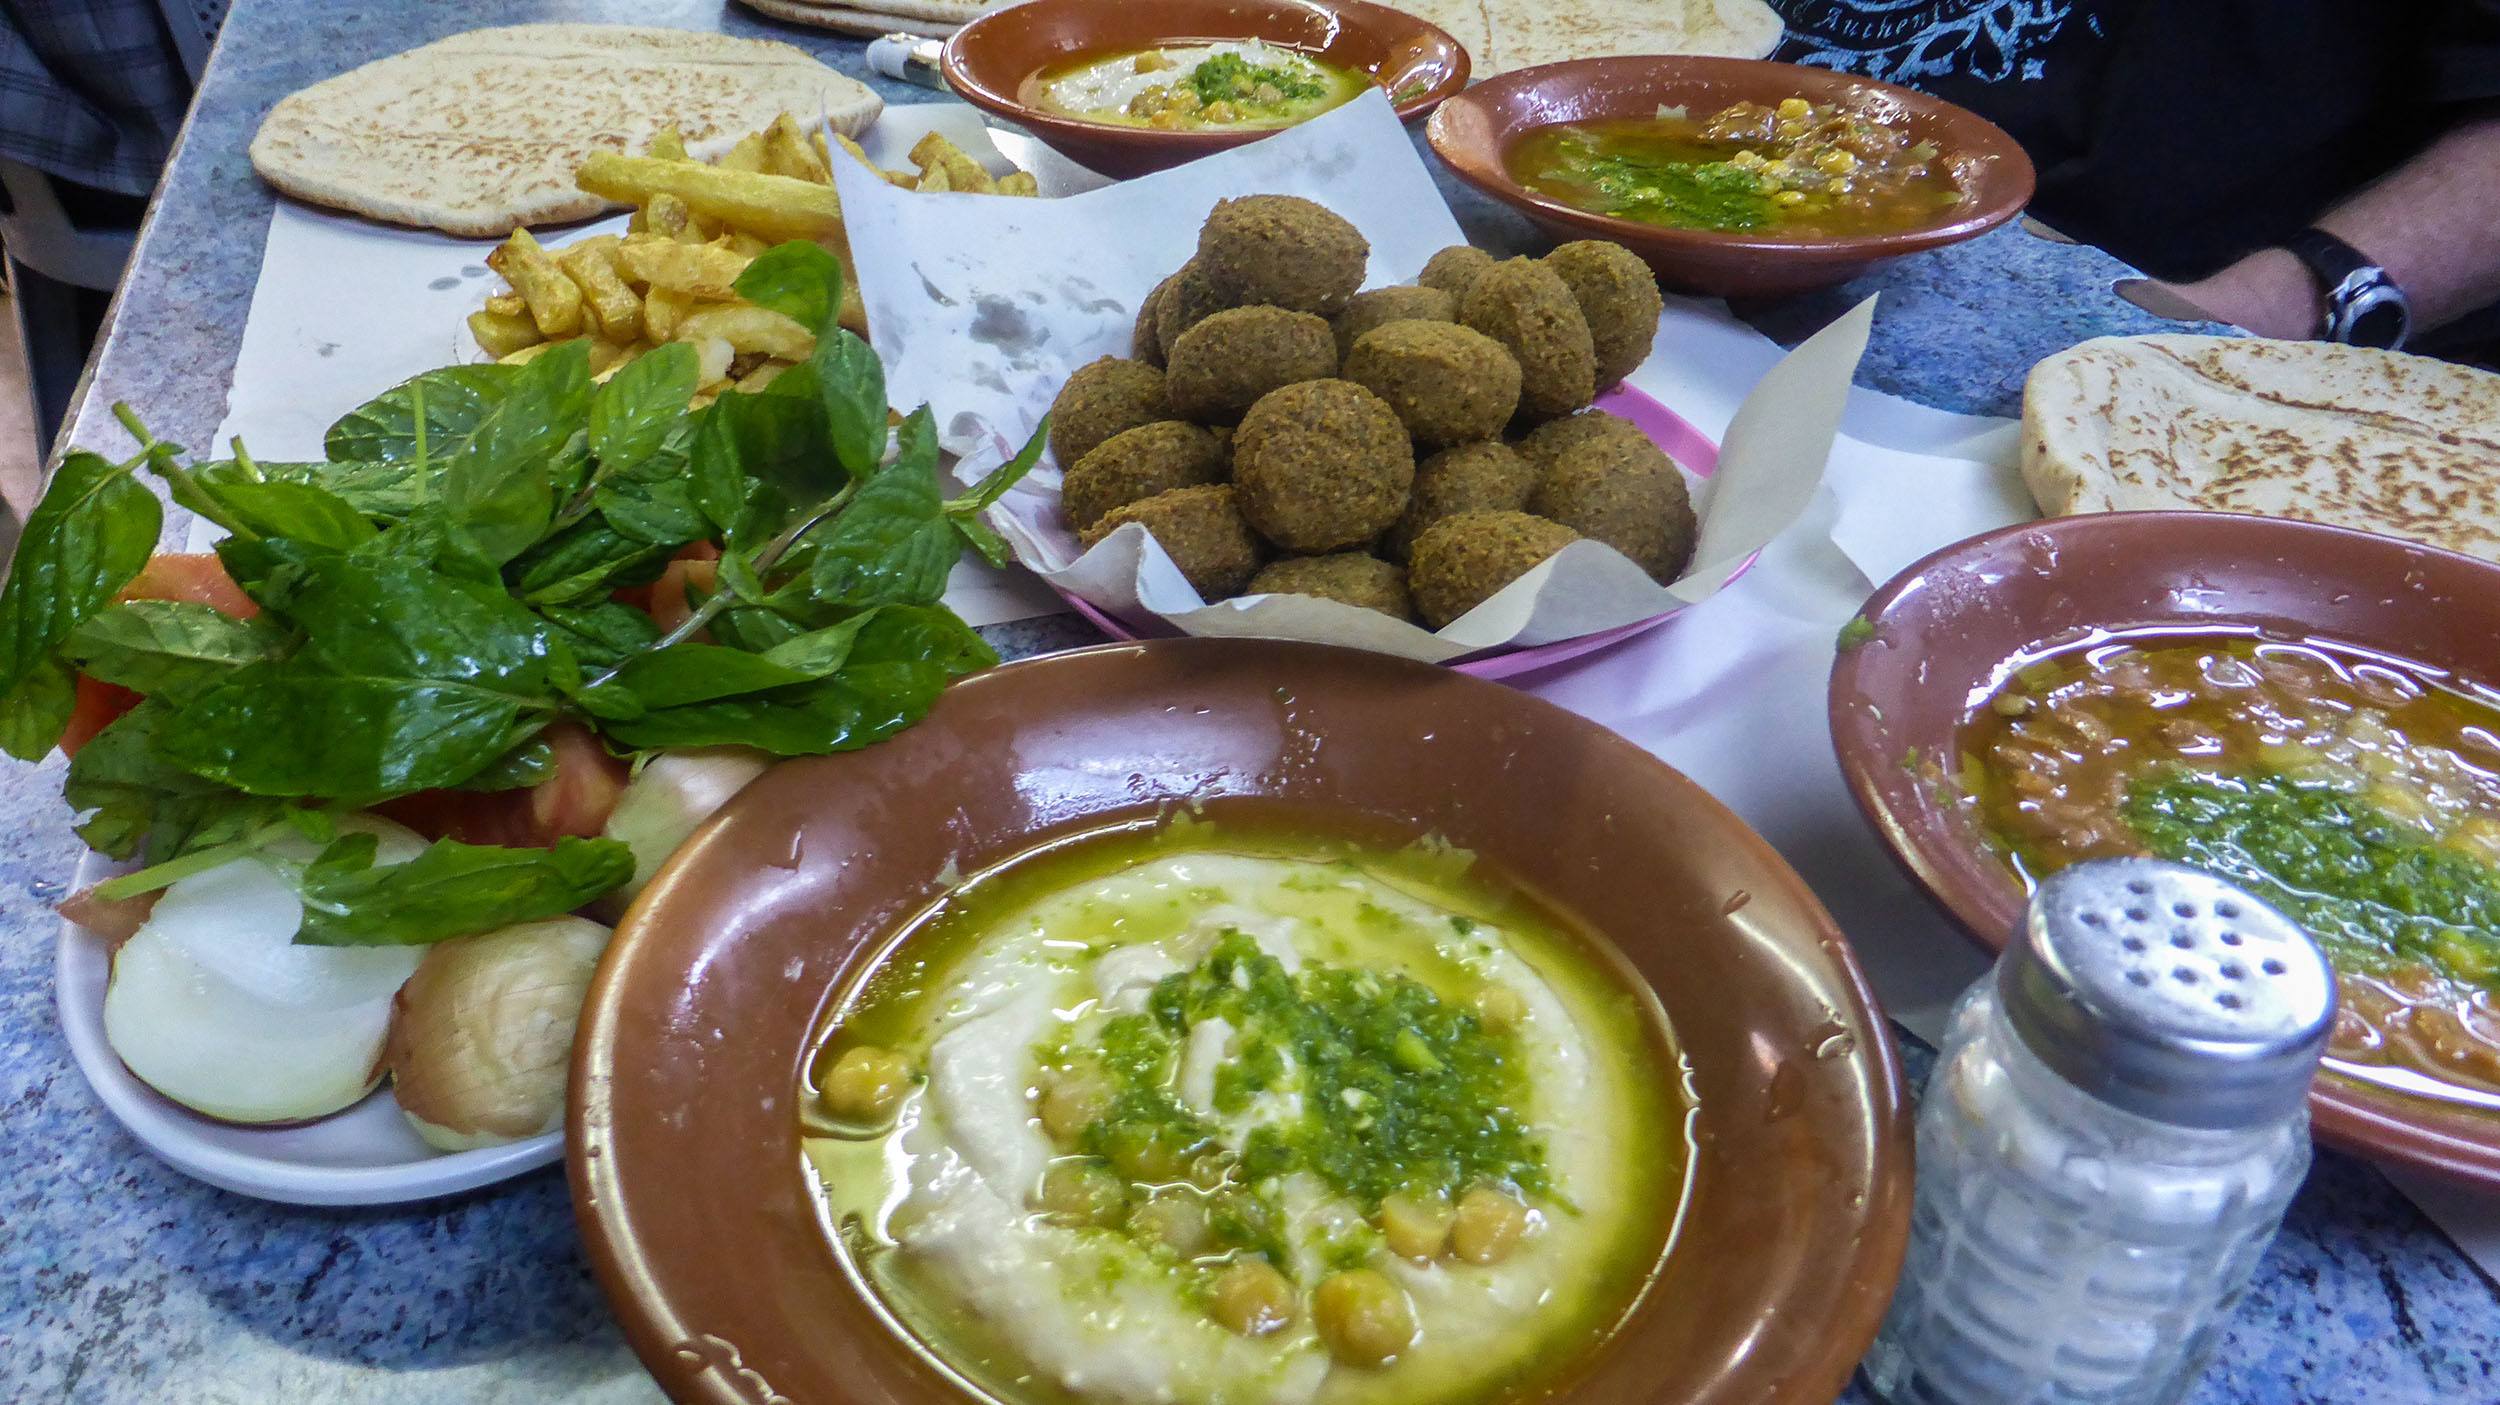 Falafel with hummus and pita at Hashem Restaurant Downtown in Amman Jordan